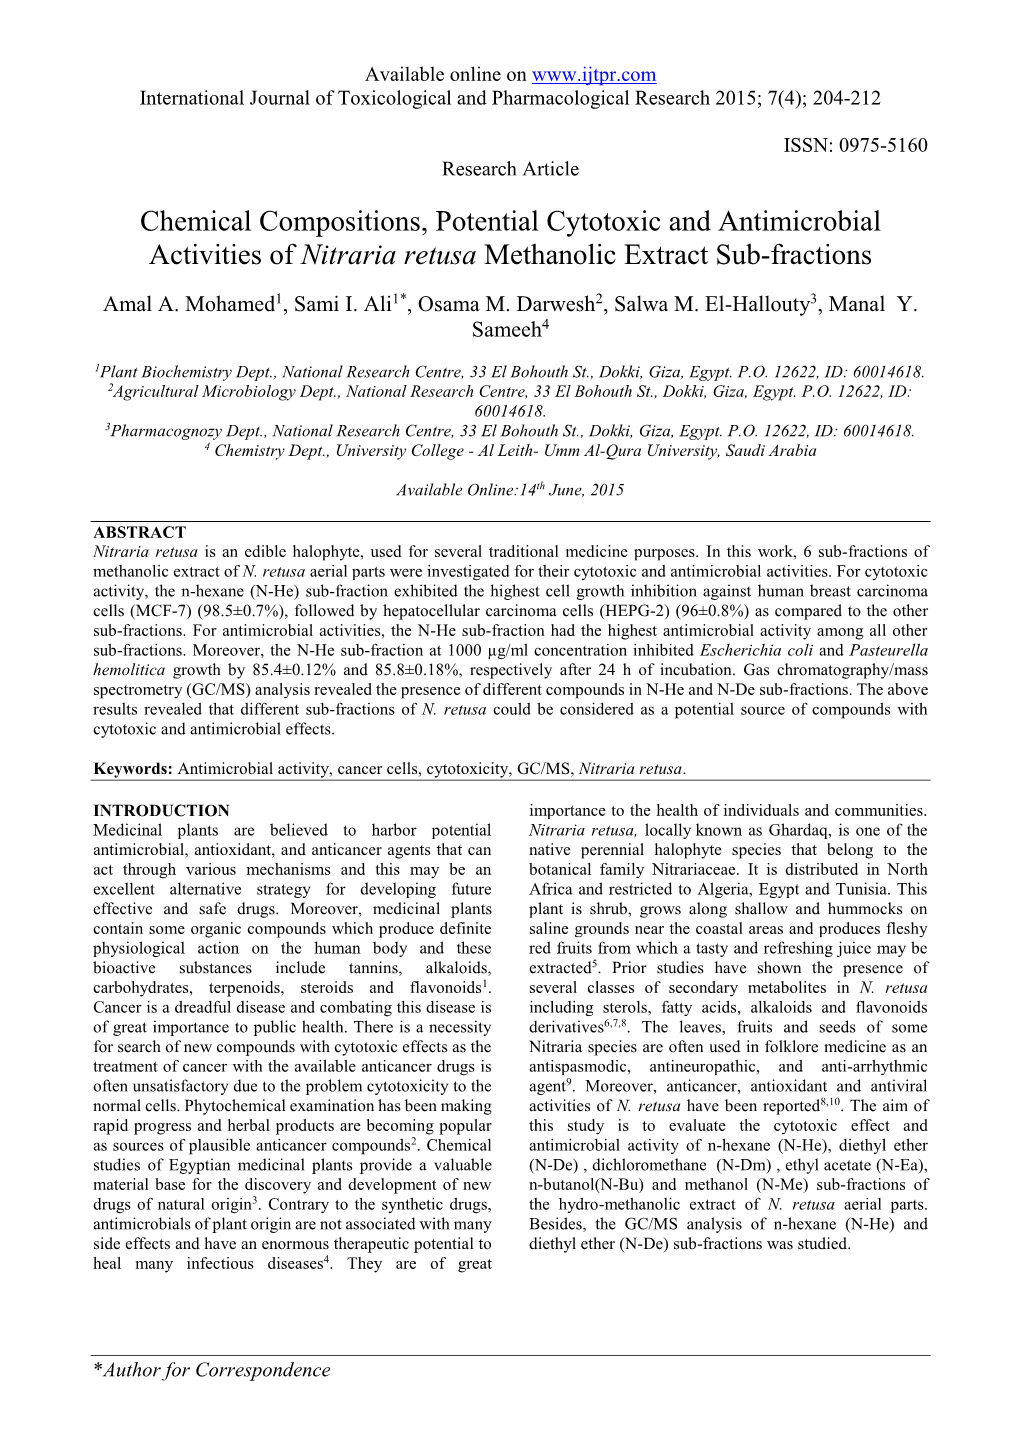 Nitraria Retusa Methanolic Extract Sub-Fractions